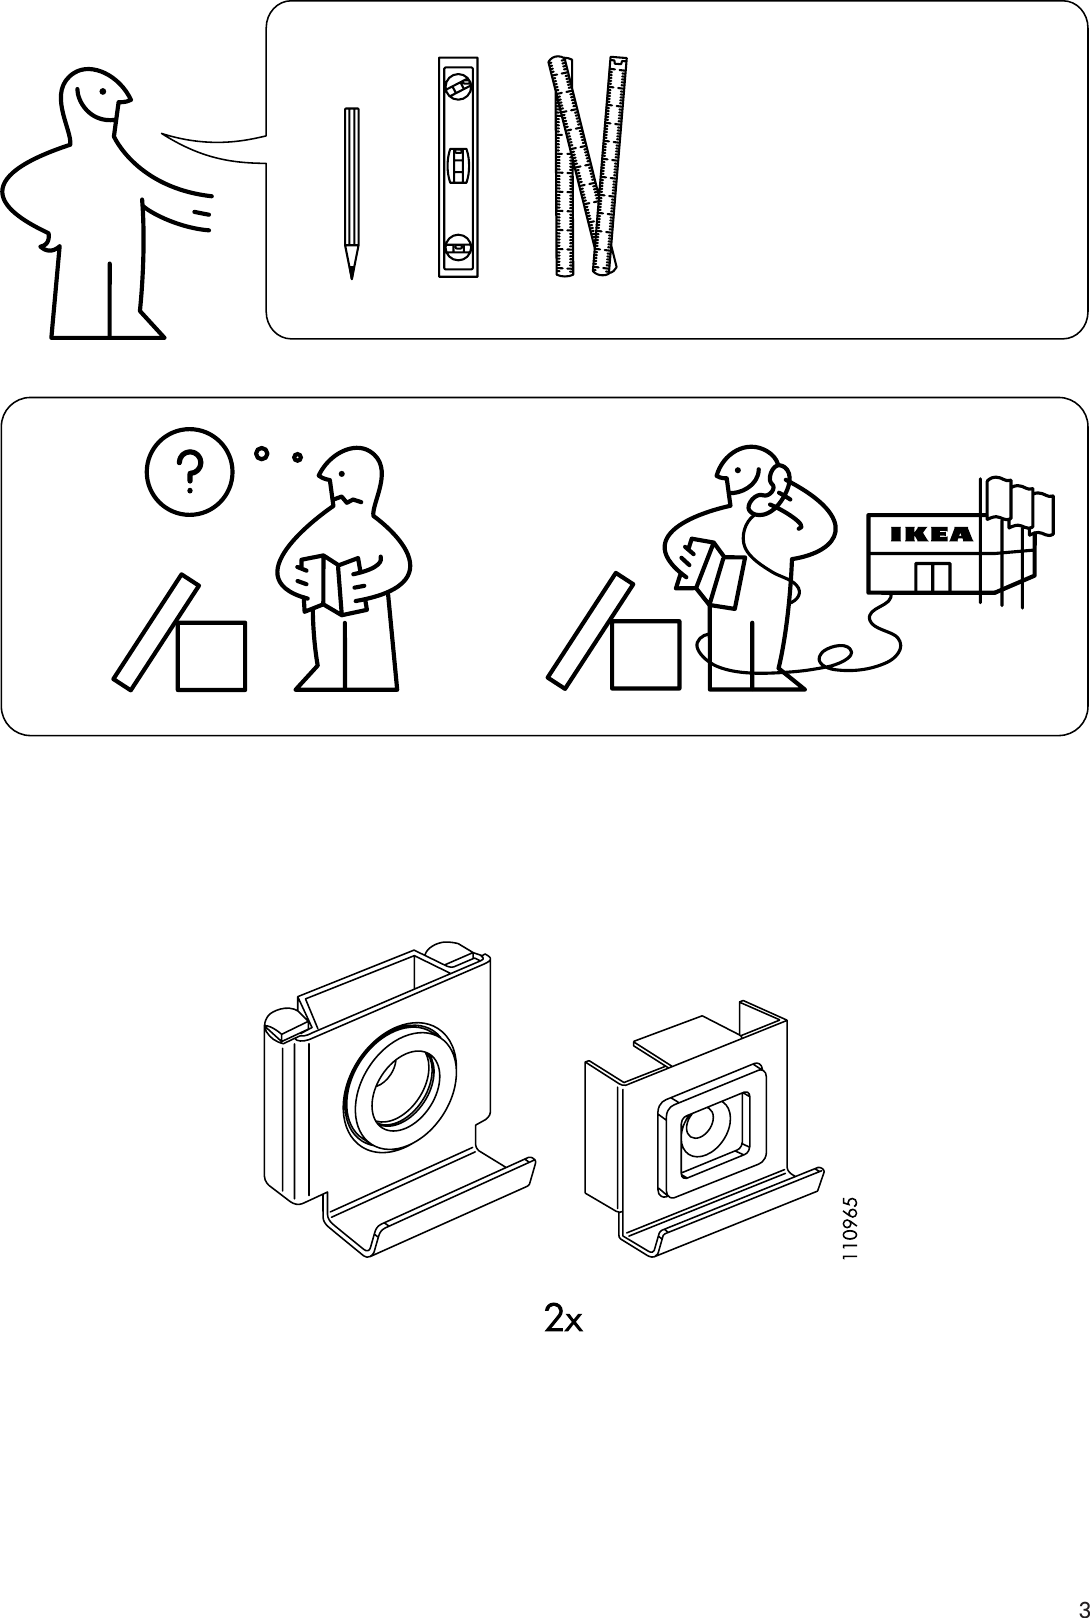 Ikea Krabb Mirror 63x8 Assembly Instruction, How To Put Up Ikea Krabb Mirror